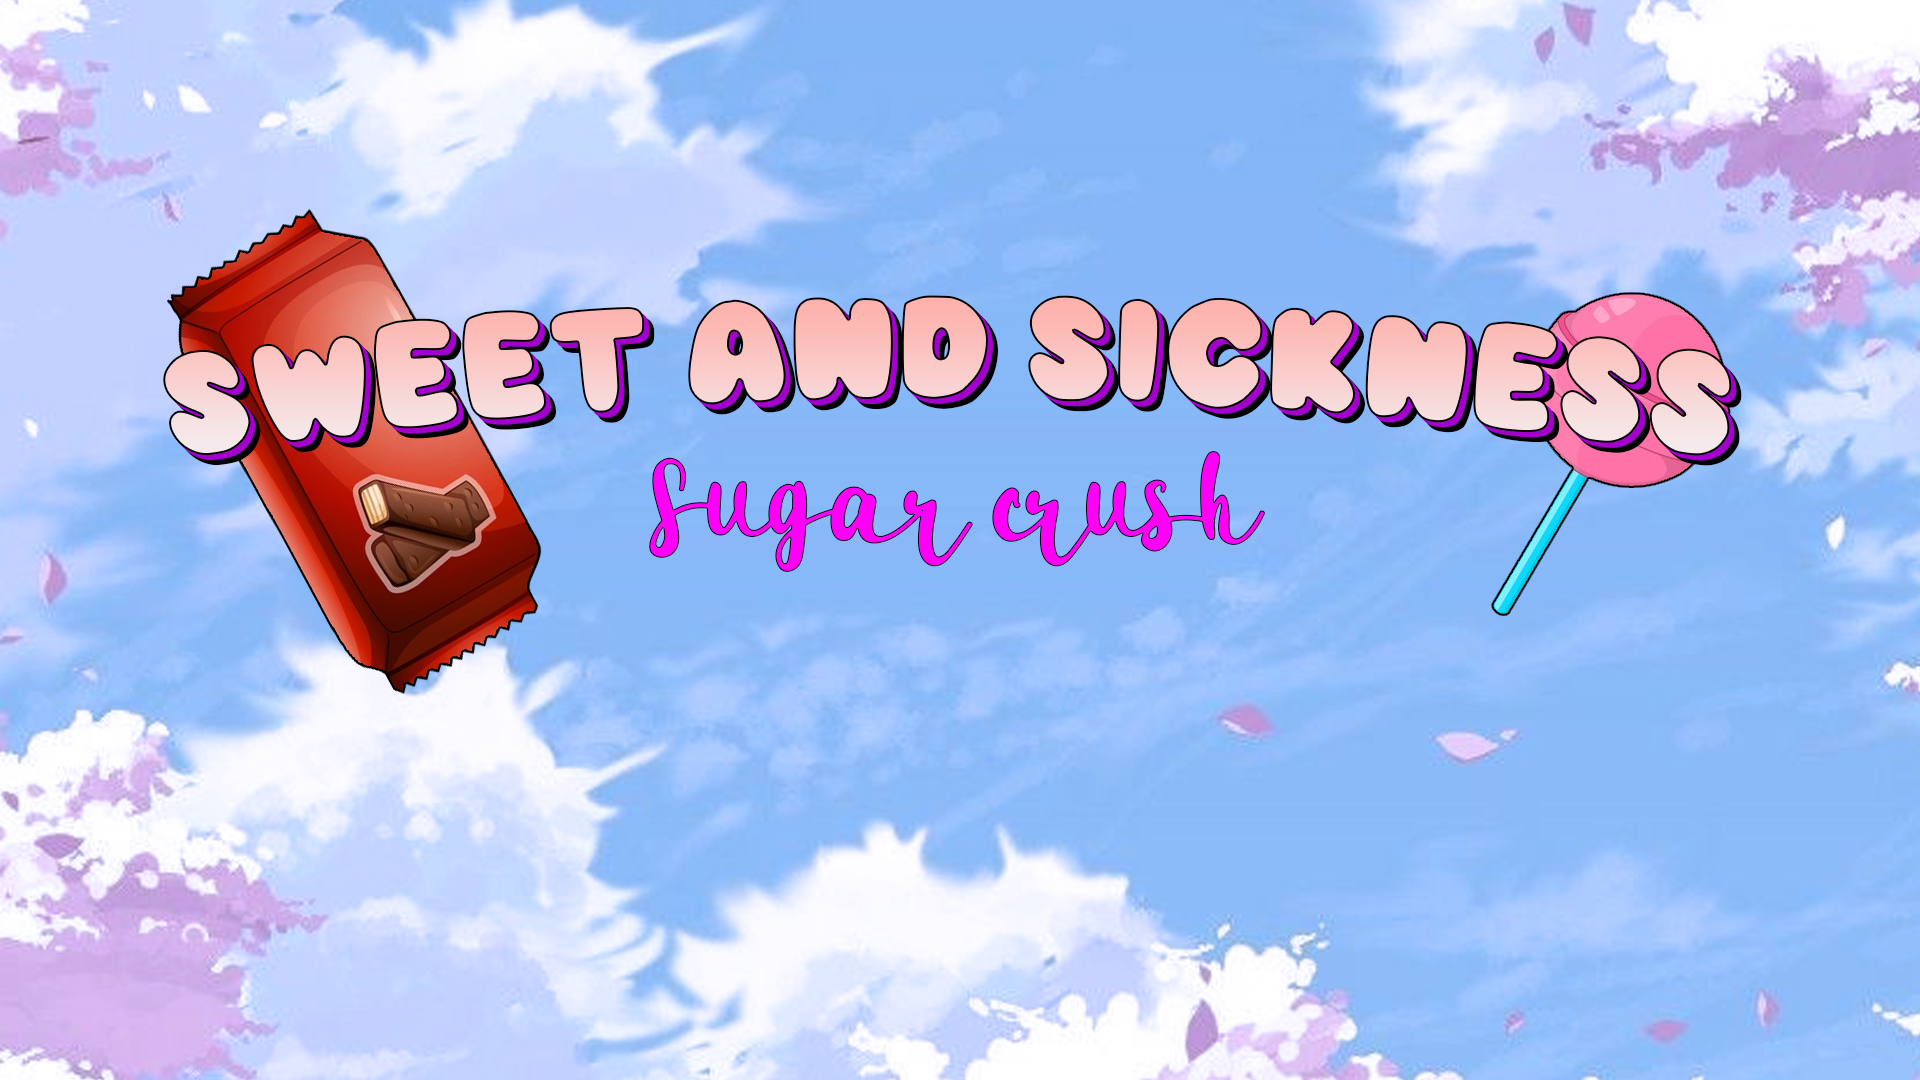 Sweet And Sickness - Sugar Crush